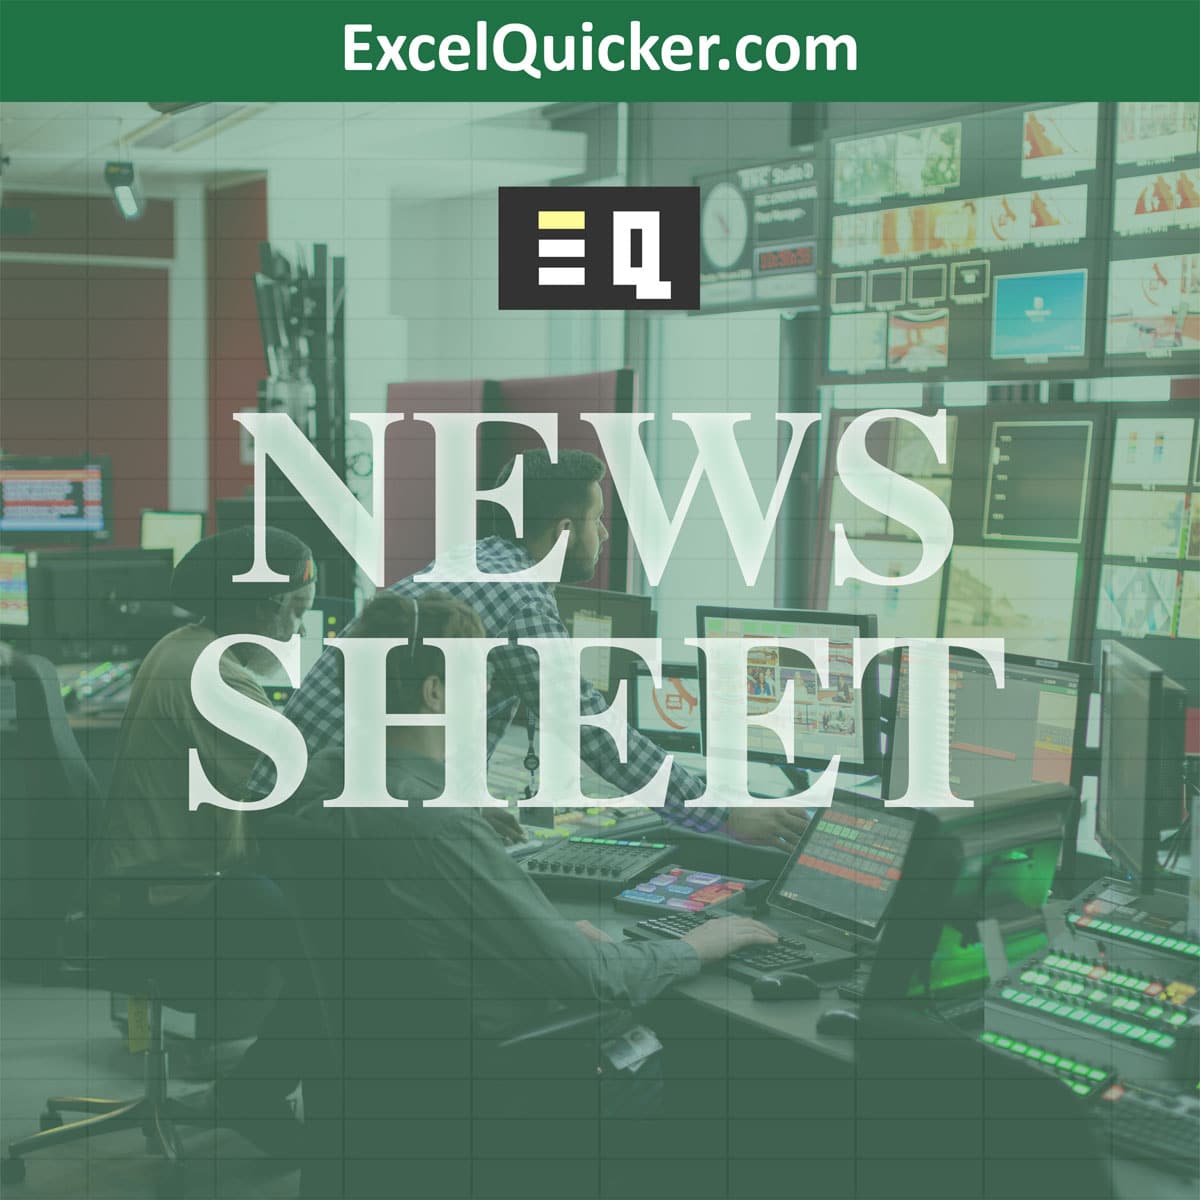 ExcelQuicker.com News Sheet